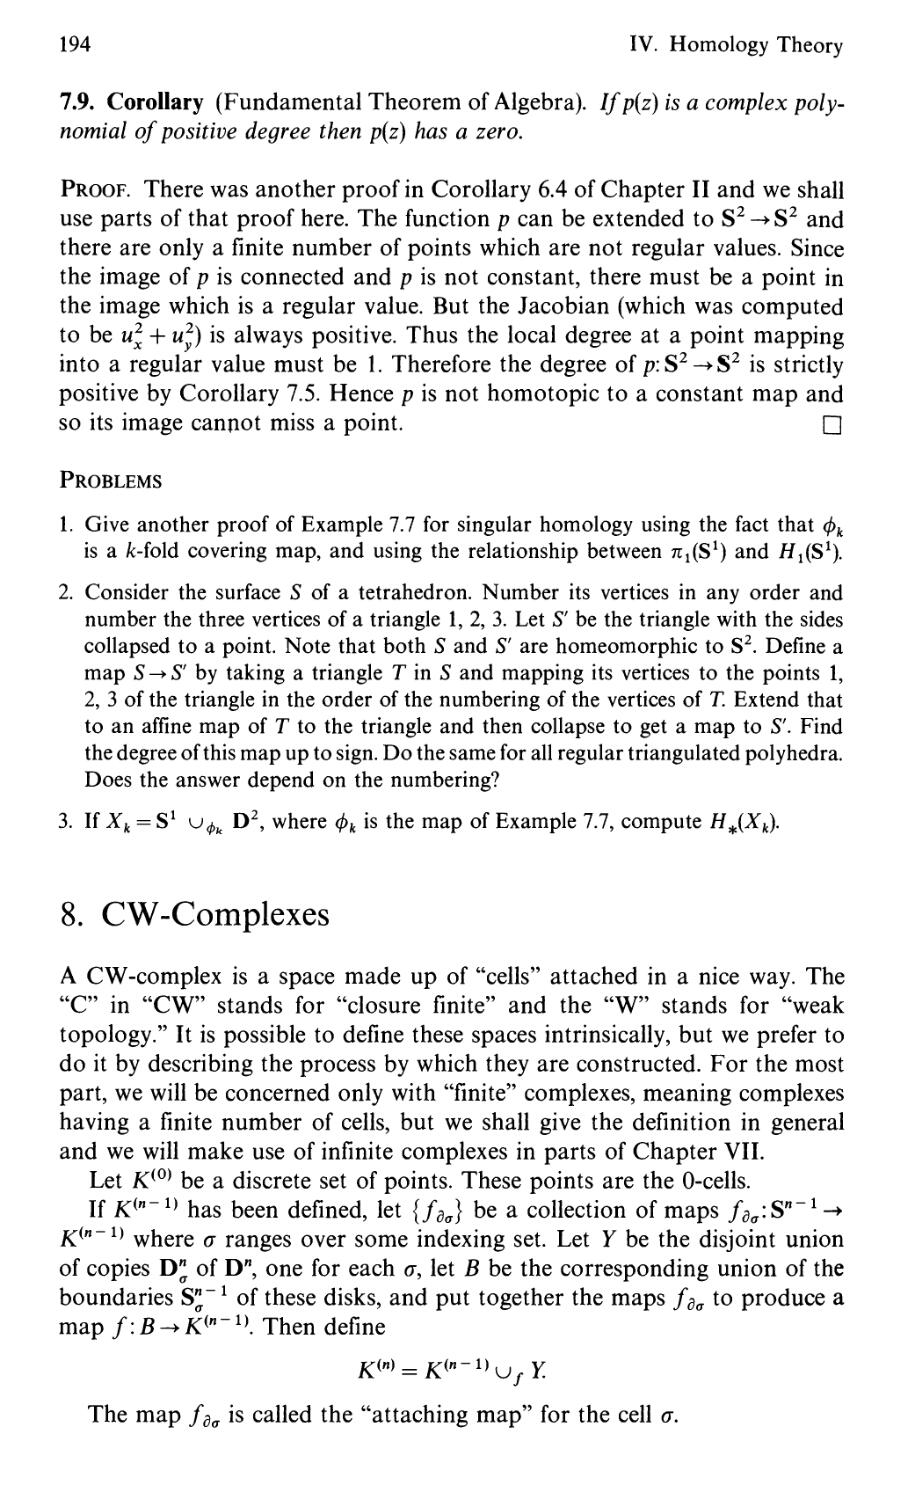 8. CW-Complexes